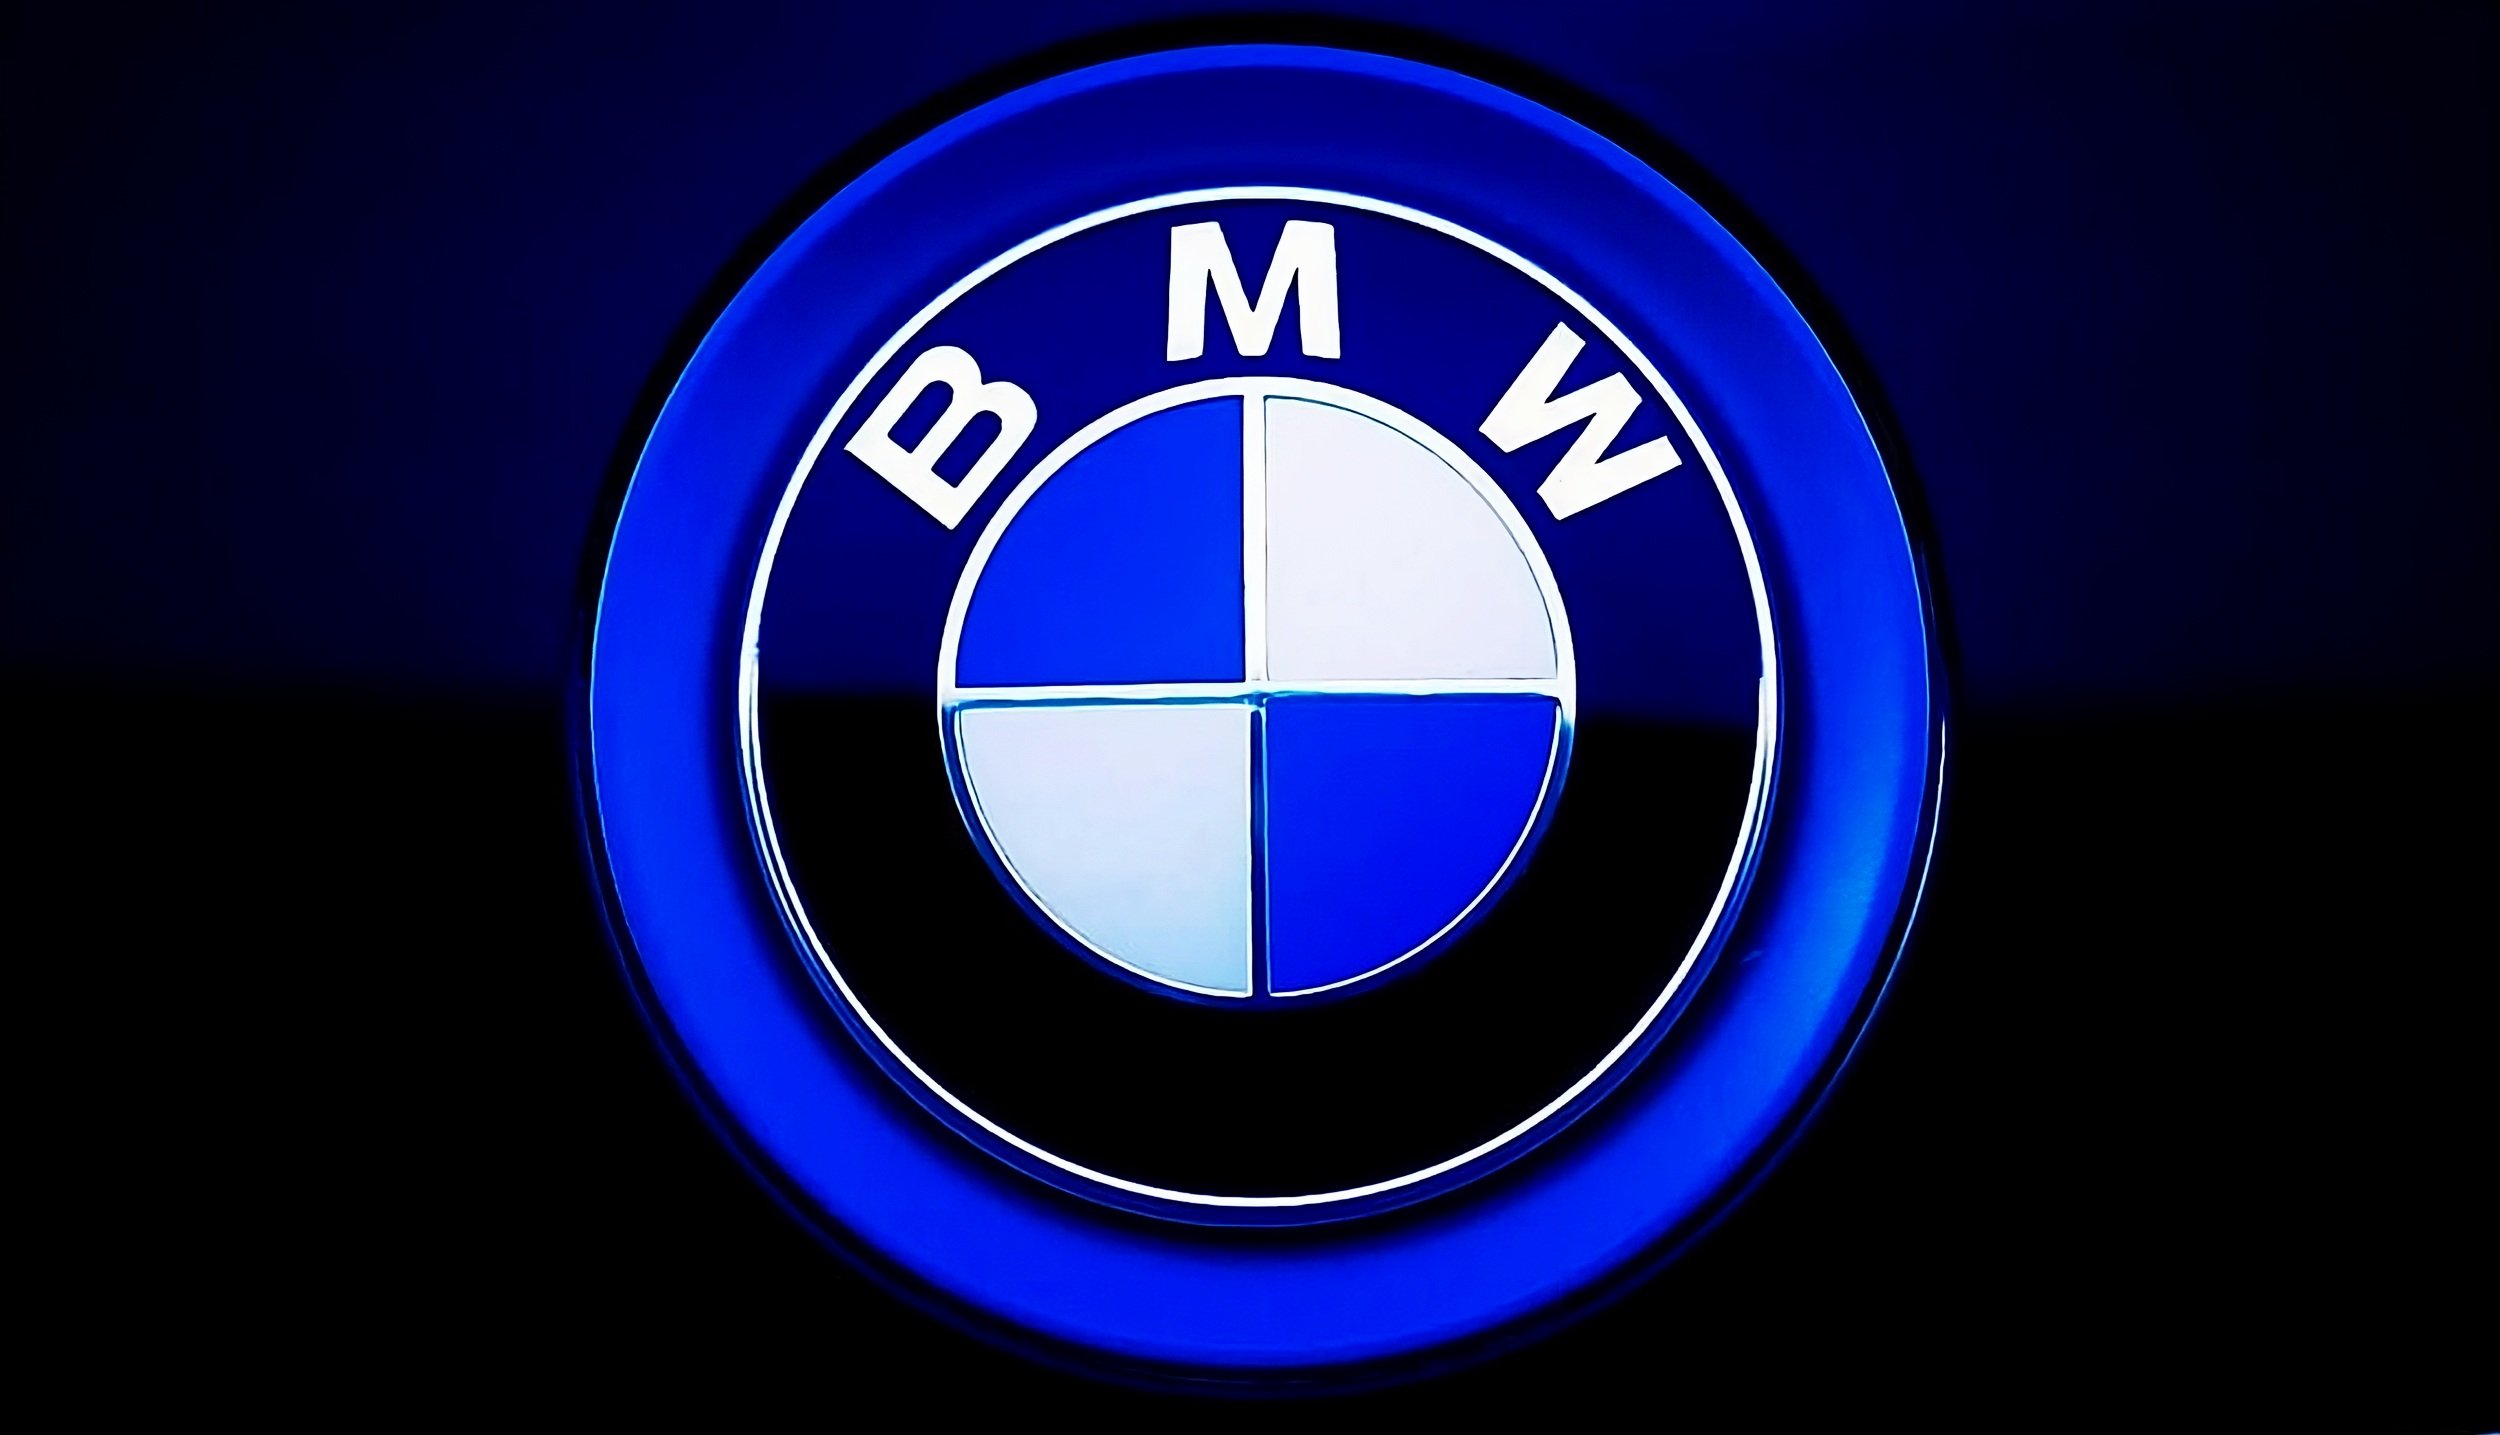 BMW x SLAM - Kyle Kuzma